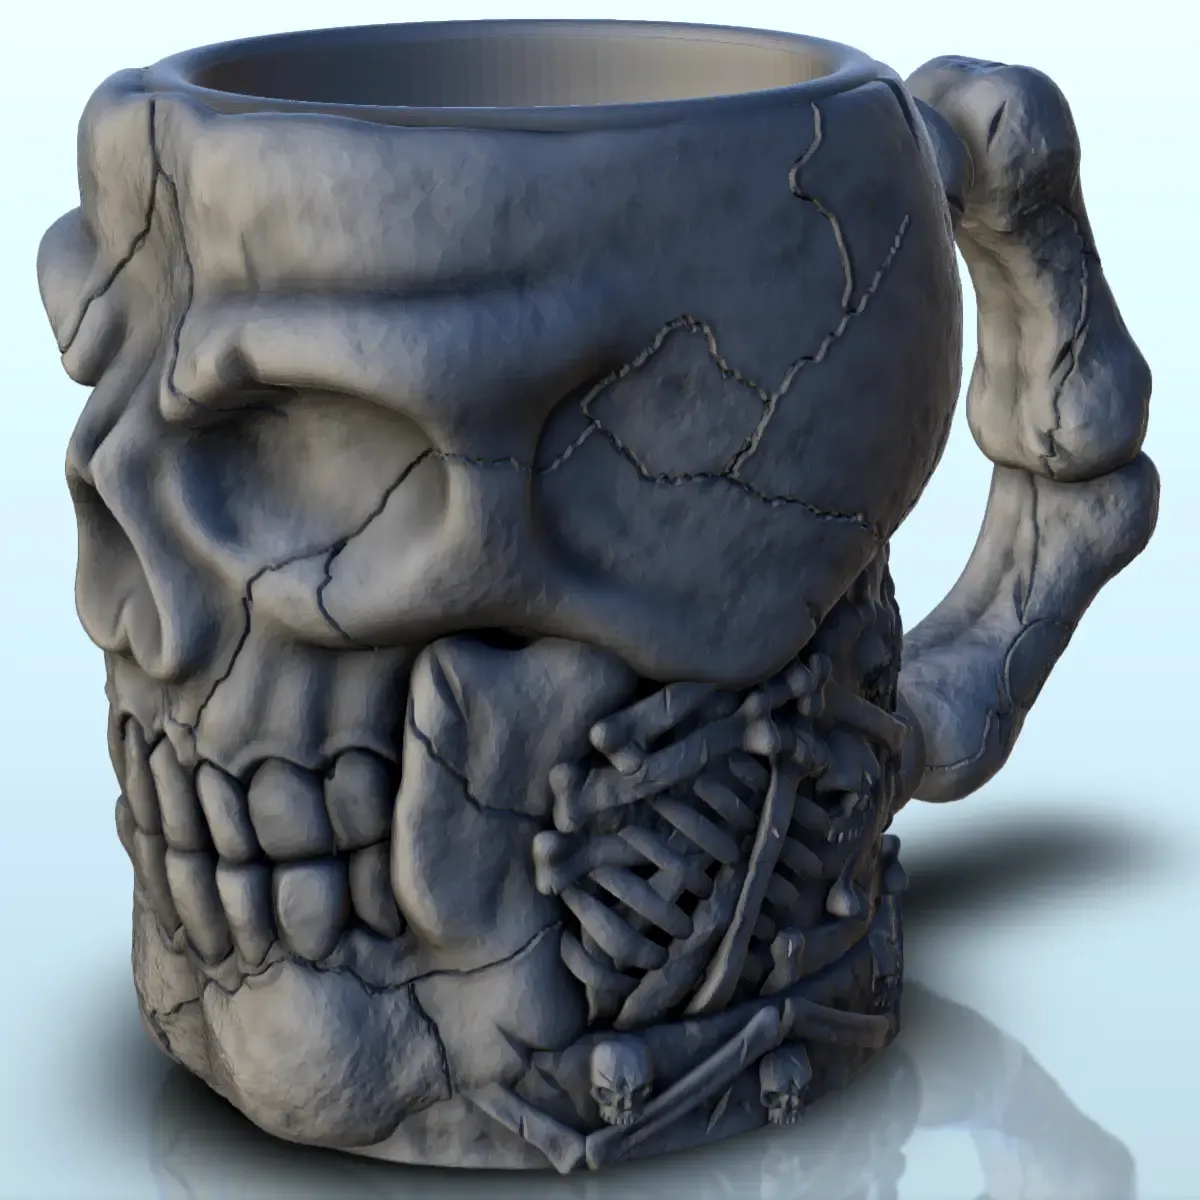 Skull and bones dice mug (2) - beer can holder